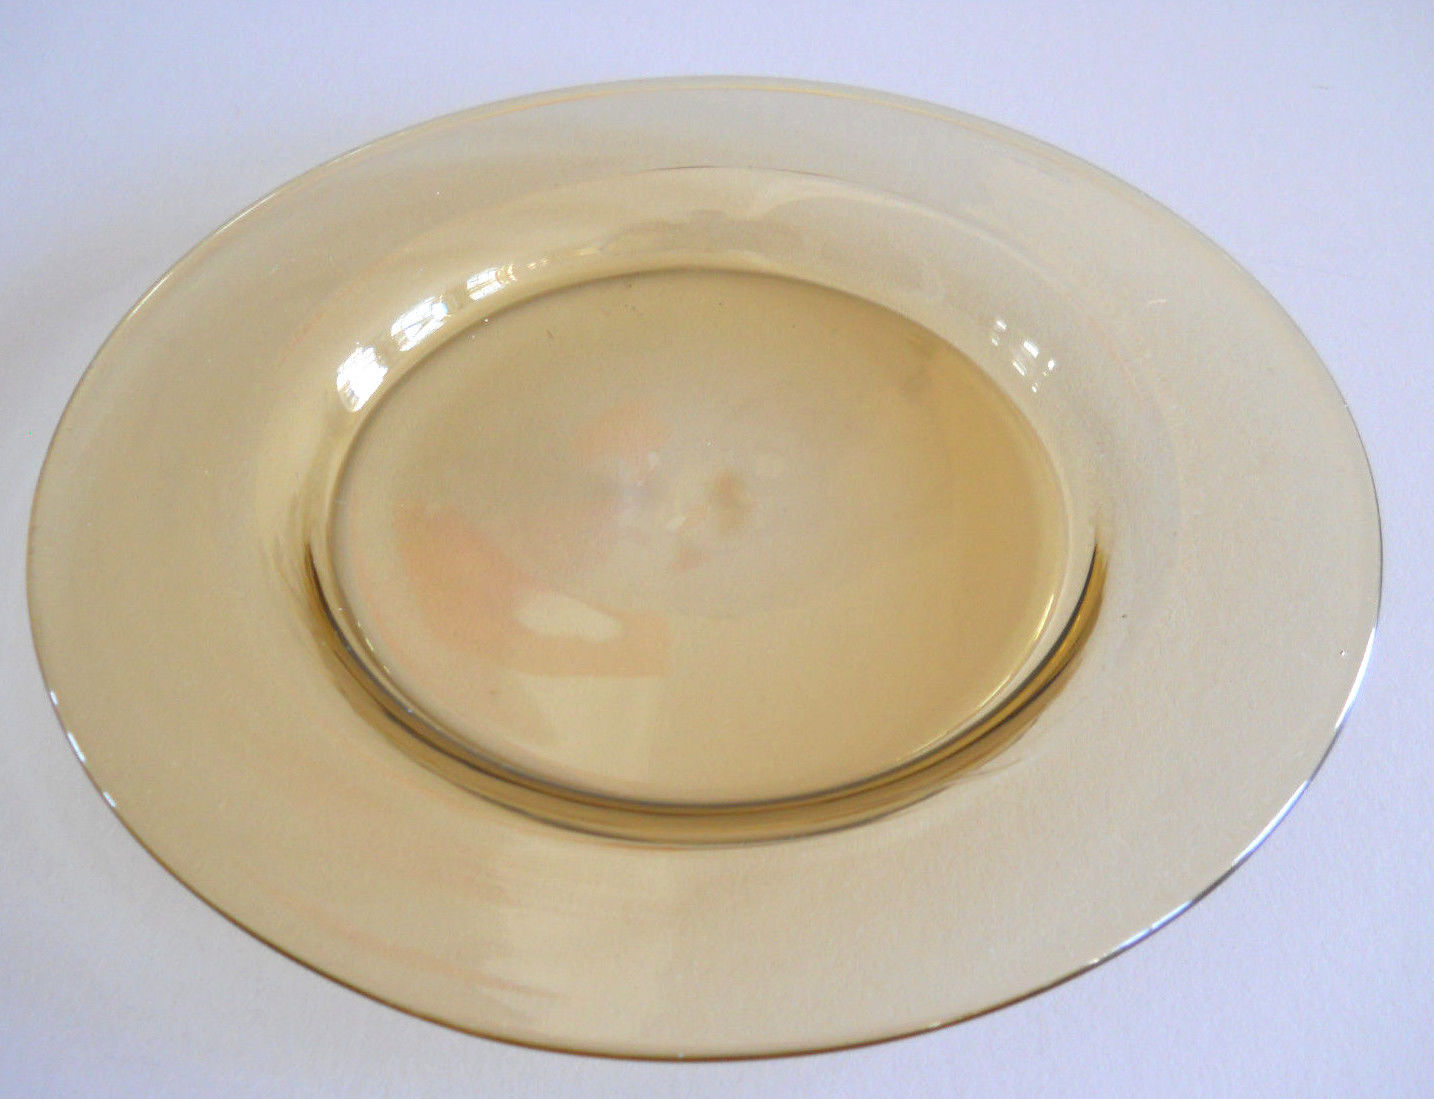 2028 - Amber Transparent Plate